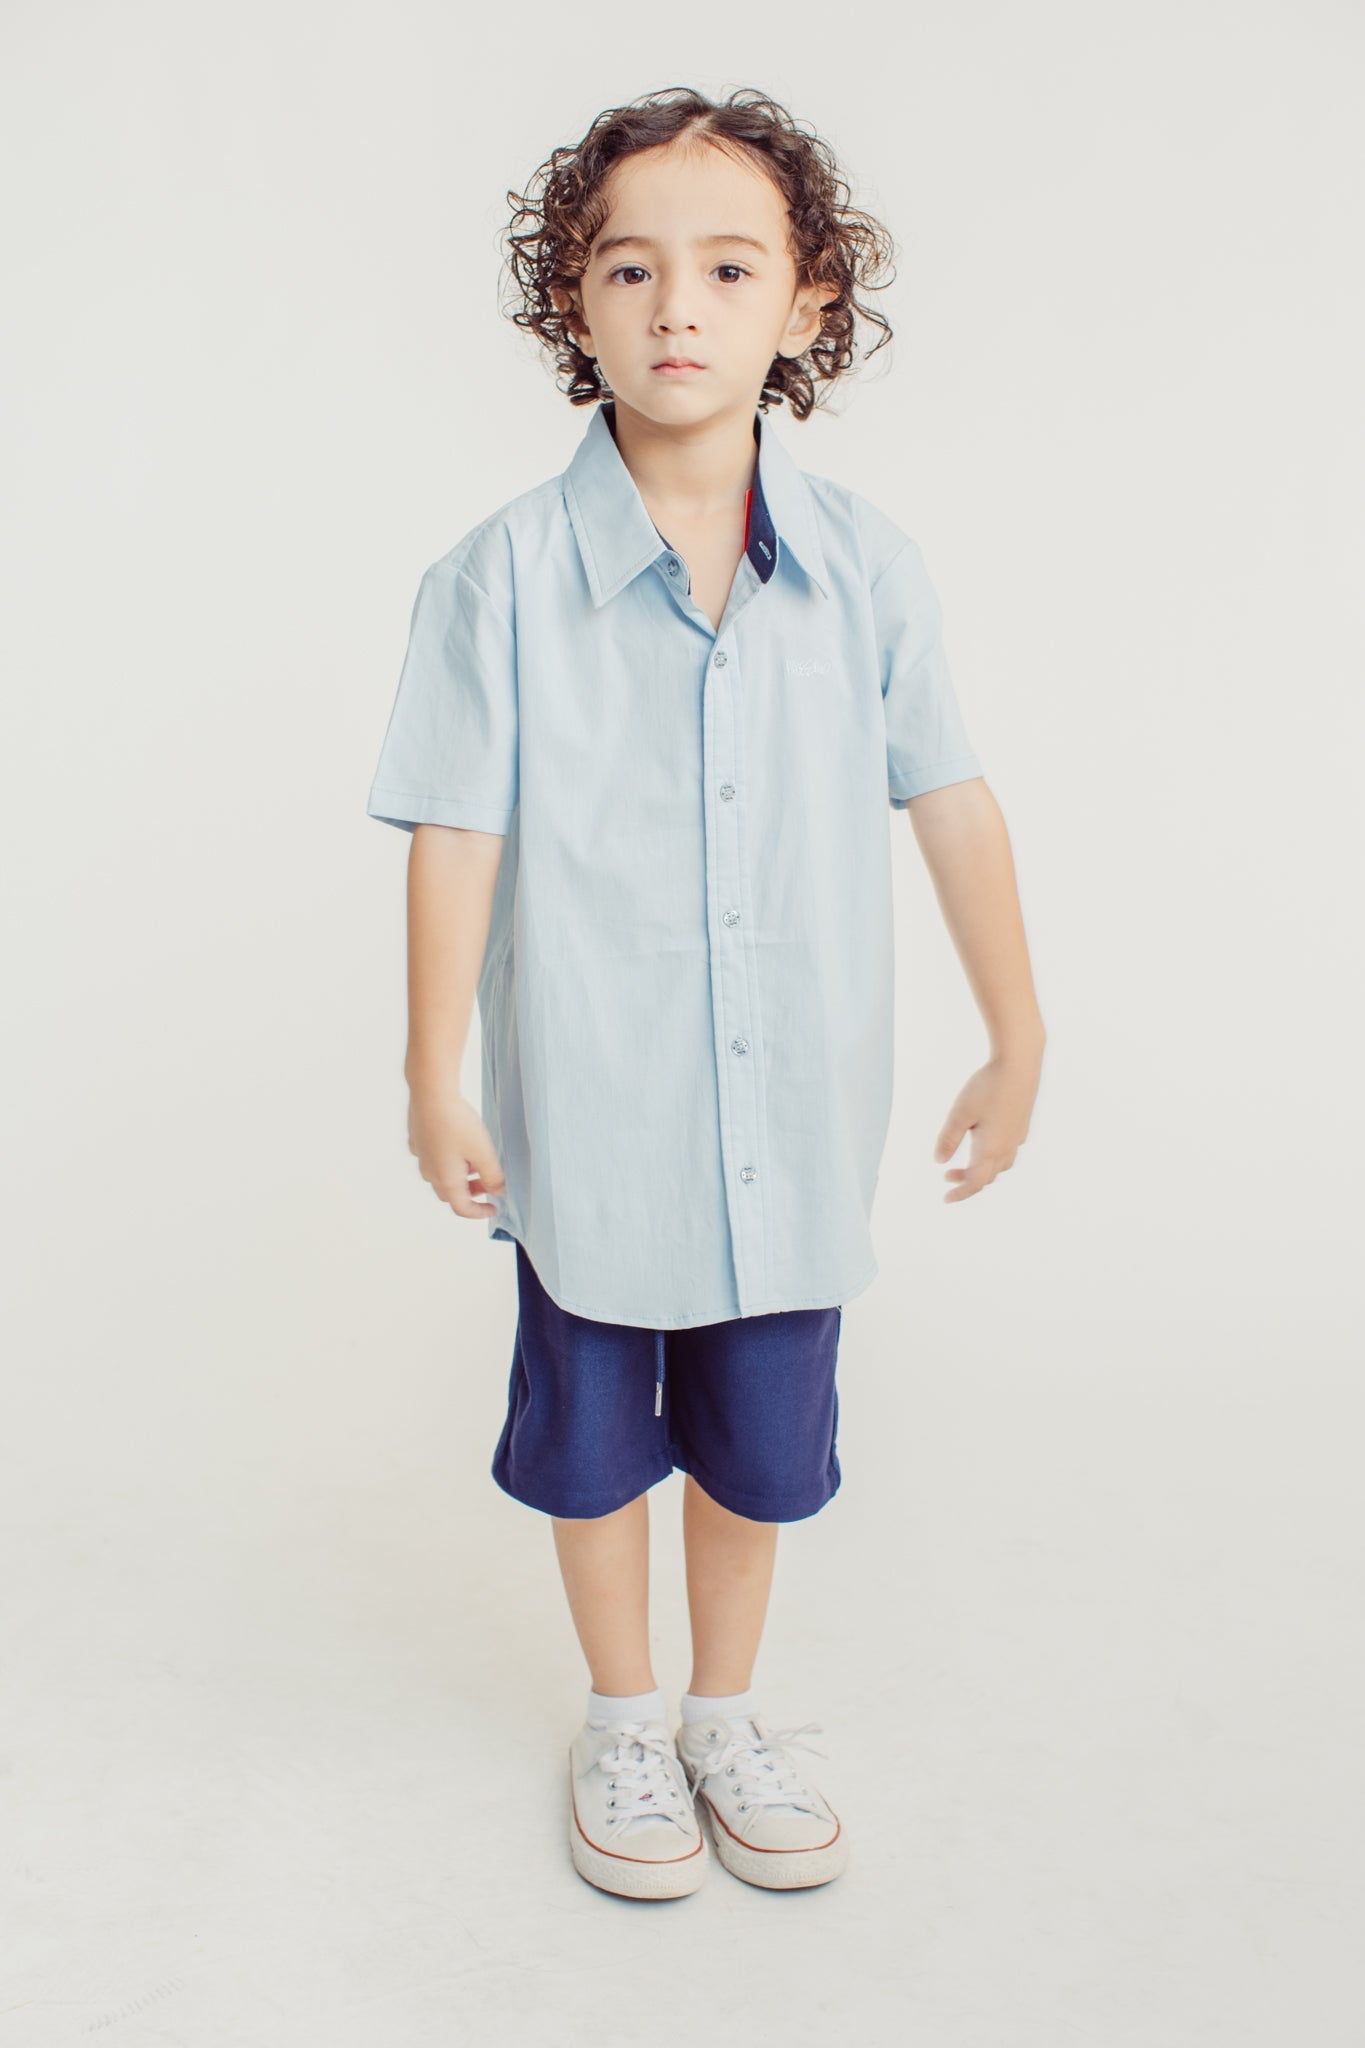 Mossimo Polo Short Sleeve Plain Shirt Kids Boys - Mossimo PH